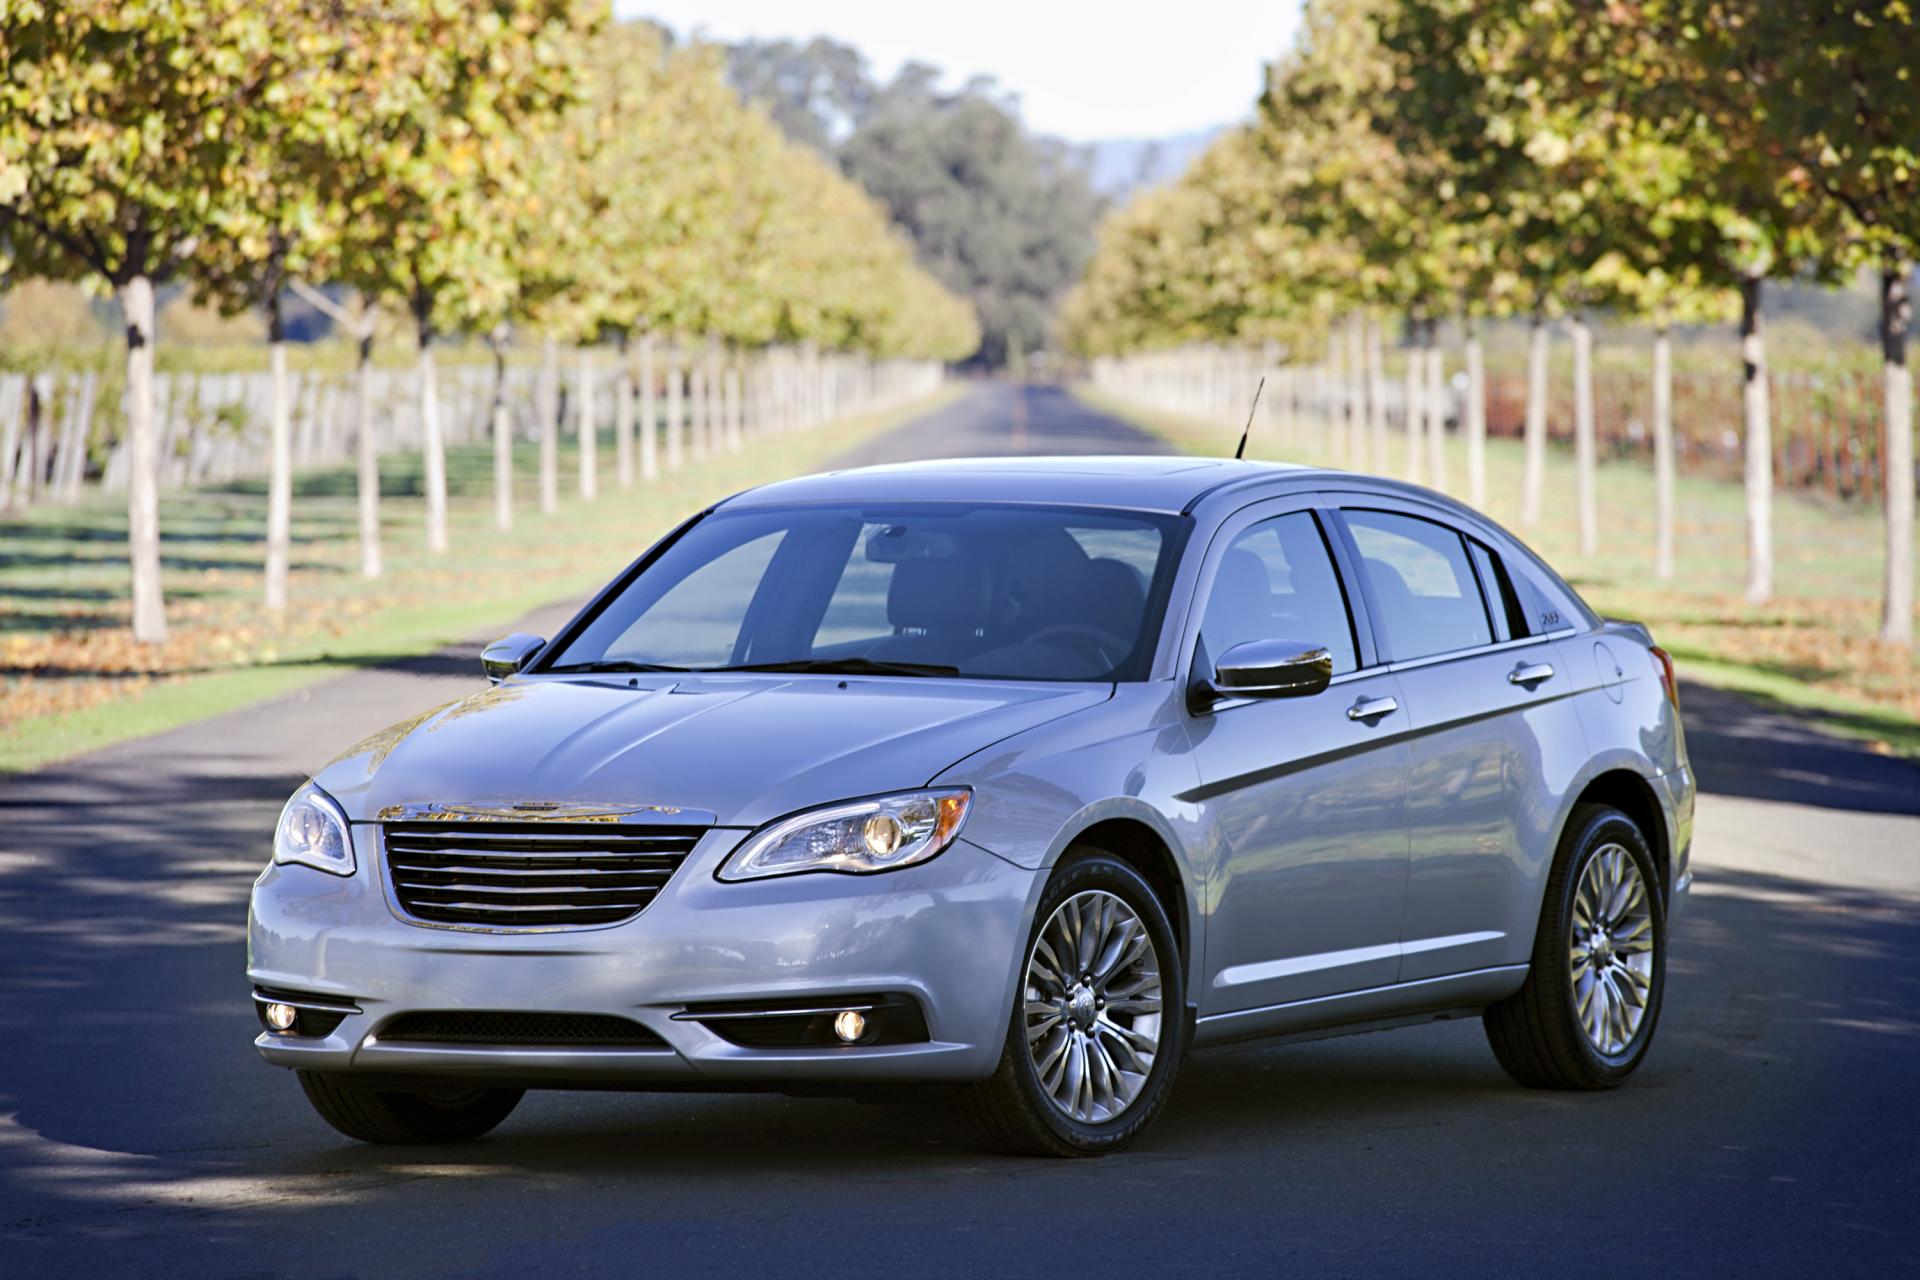 2012 Chrysler 200 News And Information Conceptcarz Com